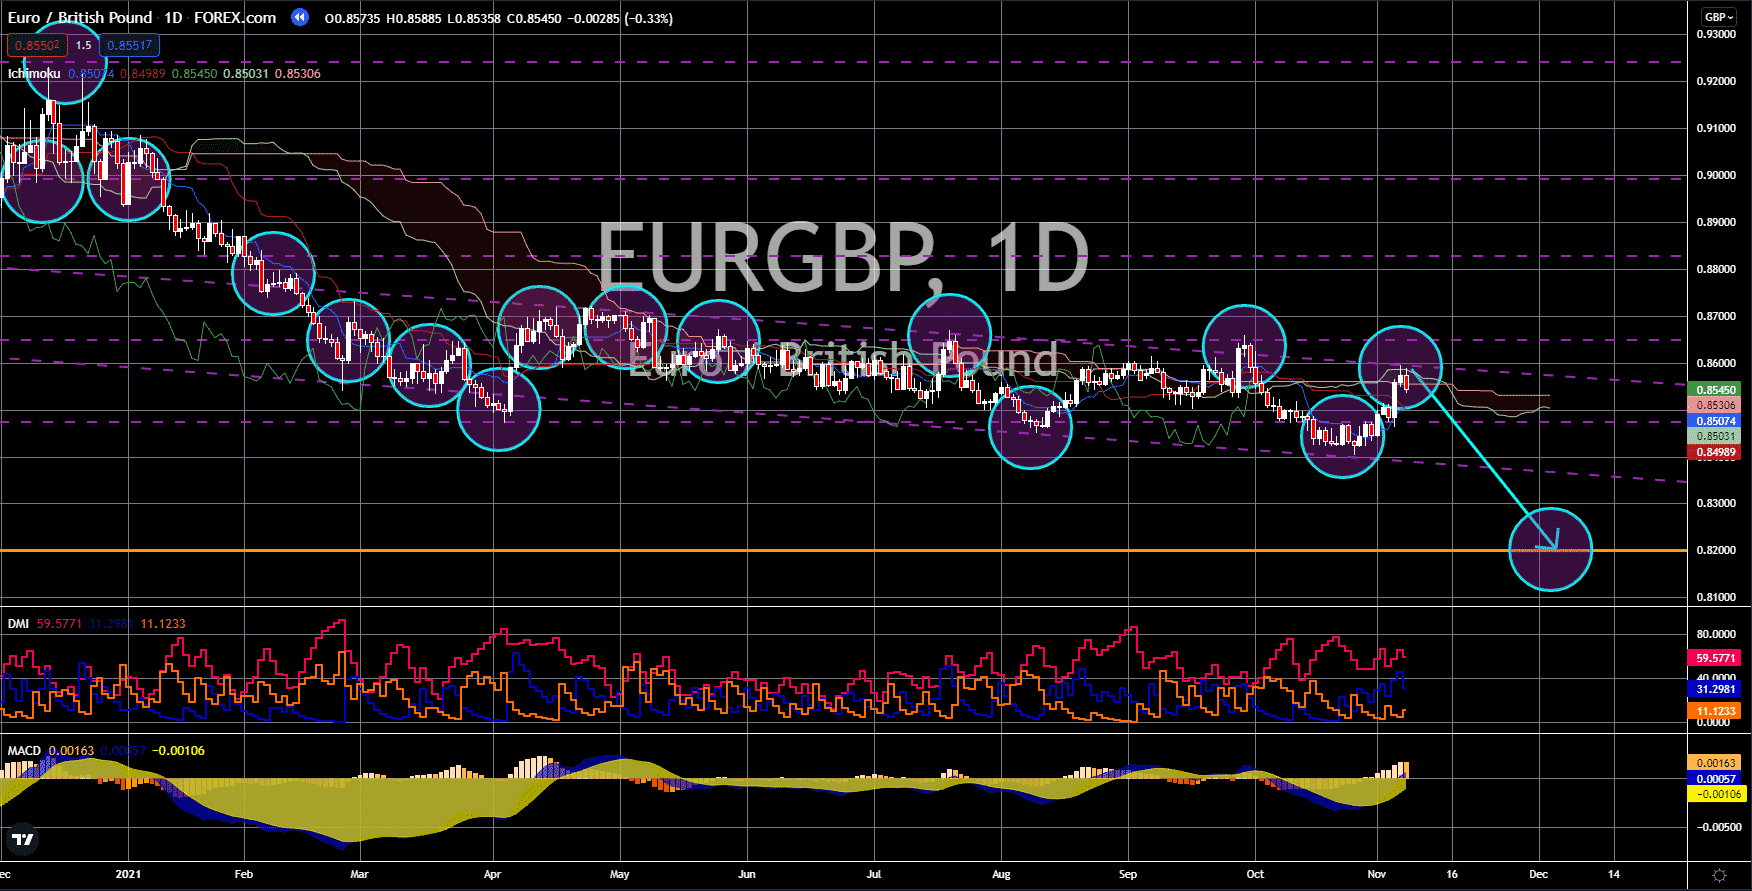 FinanceBrokerage - Market News: EUR/GBP Chart